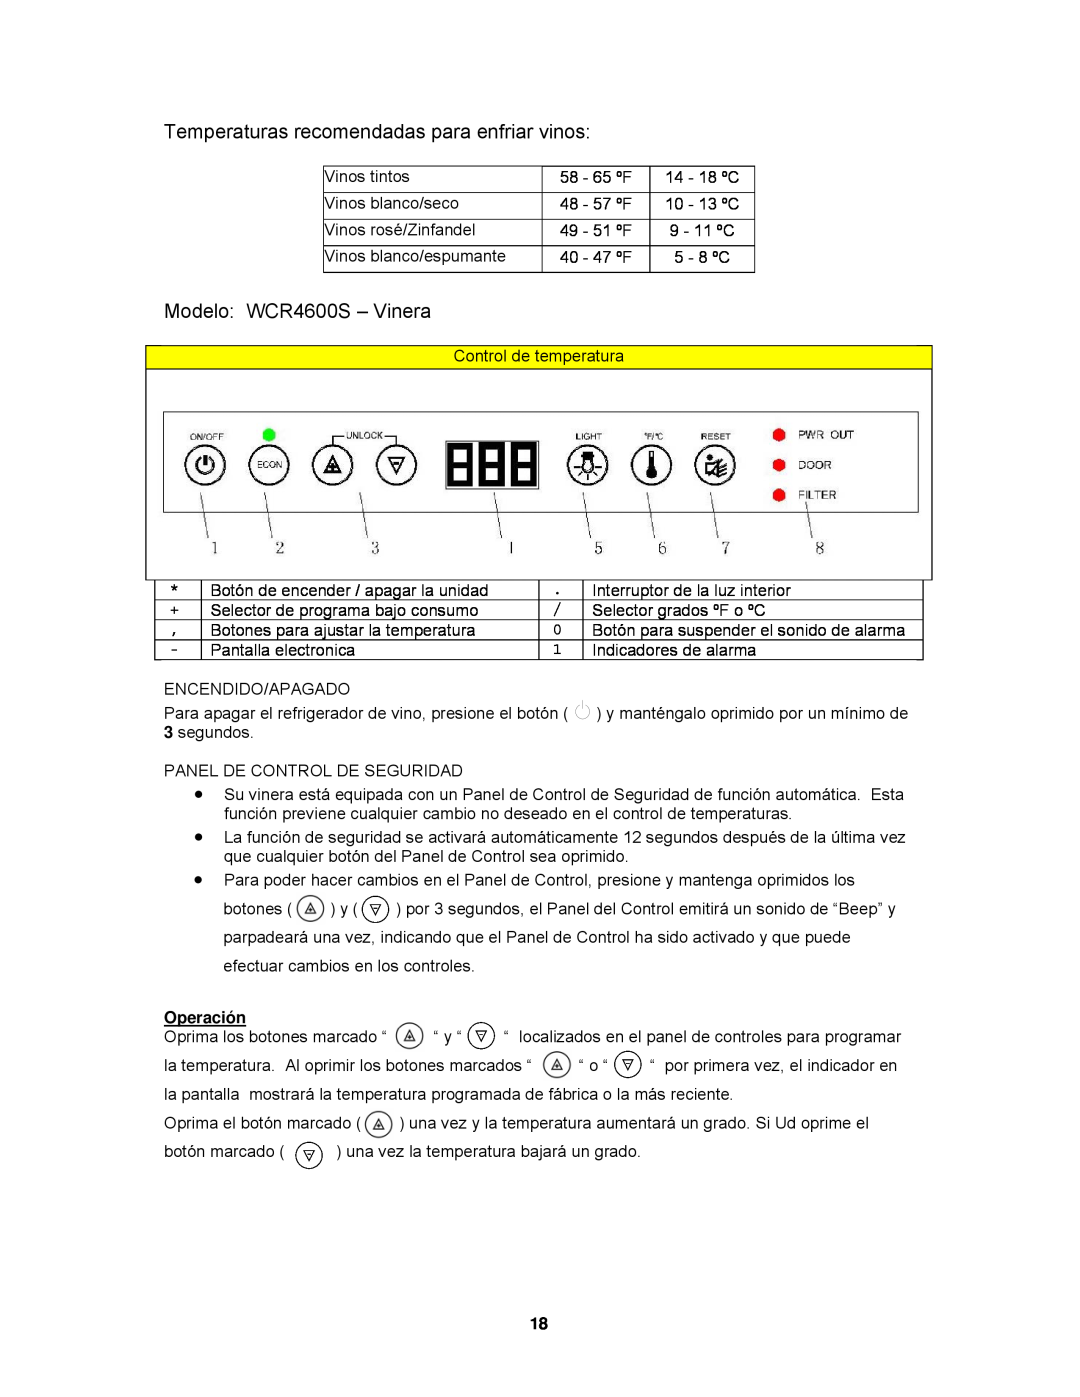 Avanti instruction manual Temperaturas recomendadas para enfriar vinos, Modelo WCR4600S - Vinera, Operación 